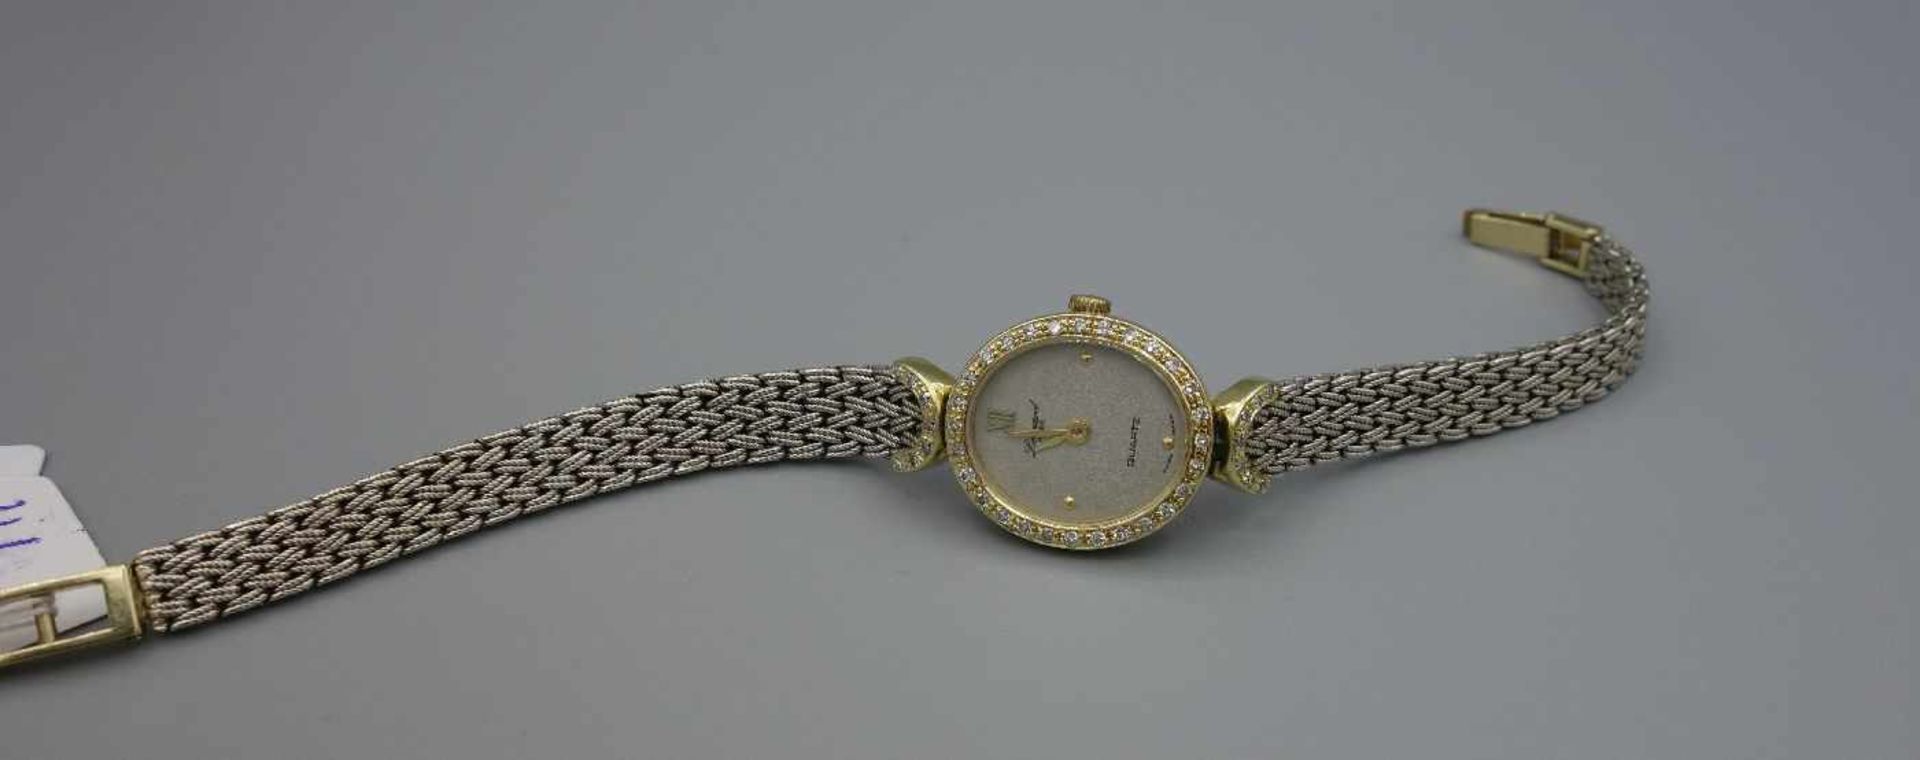 ELEGANTE DAMEN-ARMBANDUHR - LÉONARD / wristwatch, 2. H. 20. Jh., Quarz-Uhr, Manufaktur Léonard / - Bild 3 aus 7